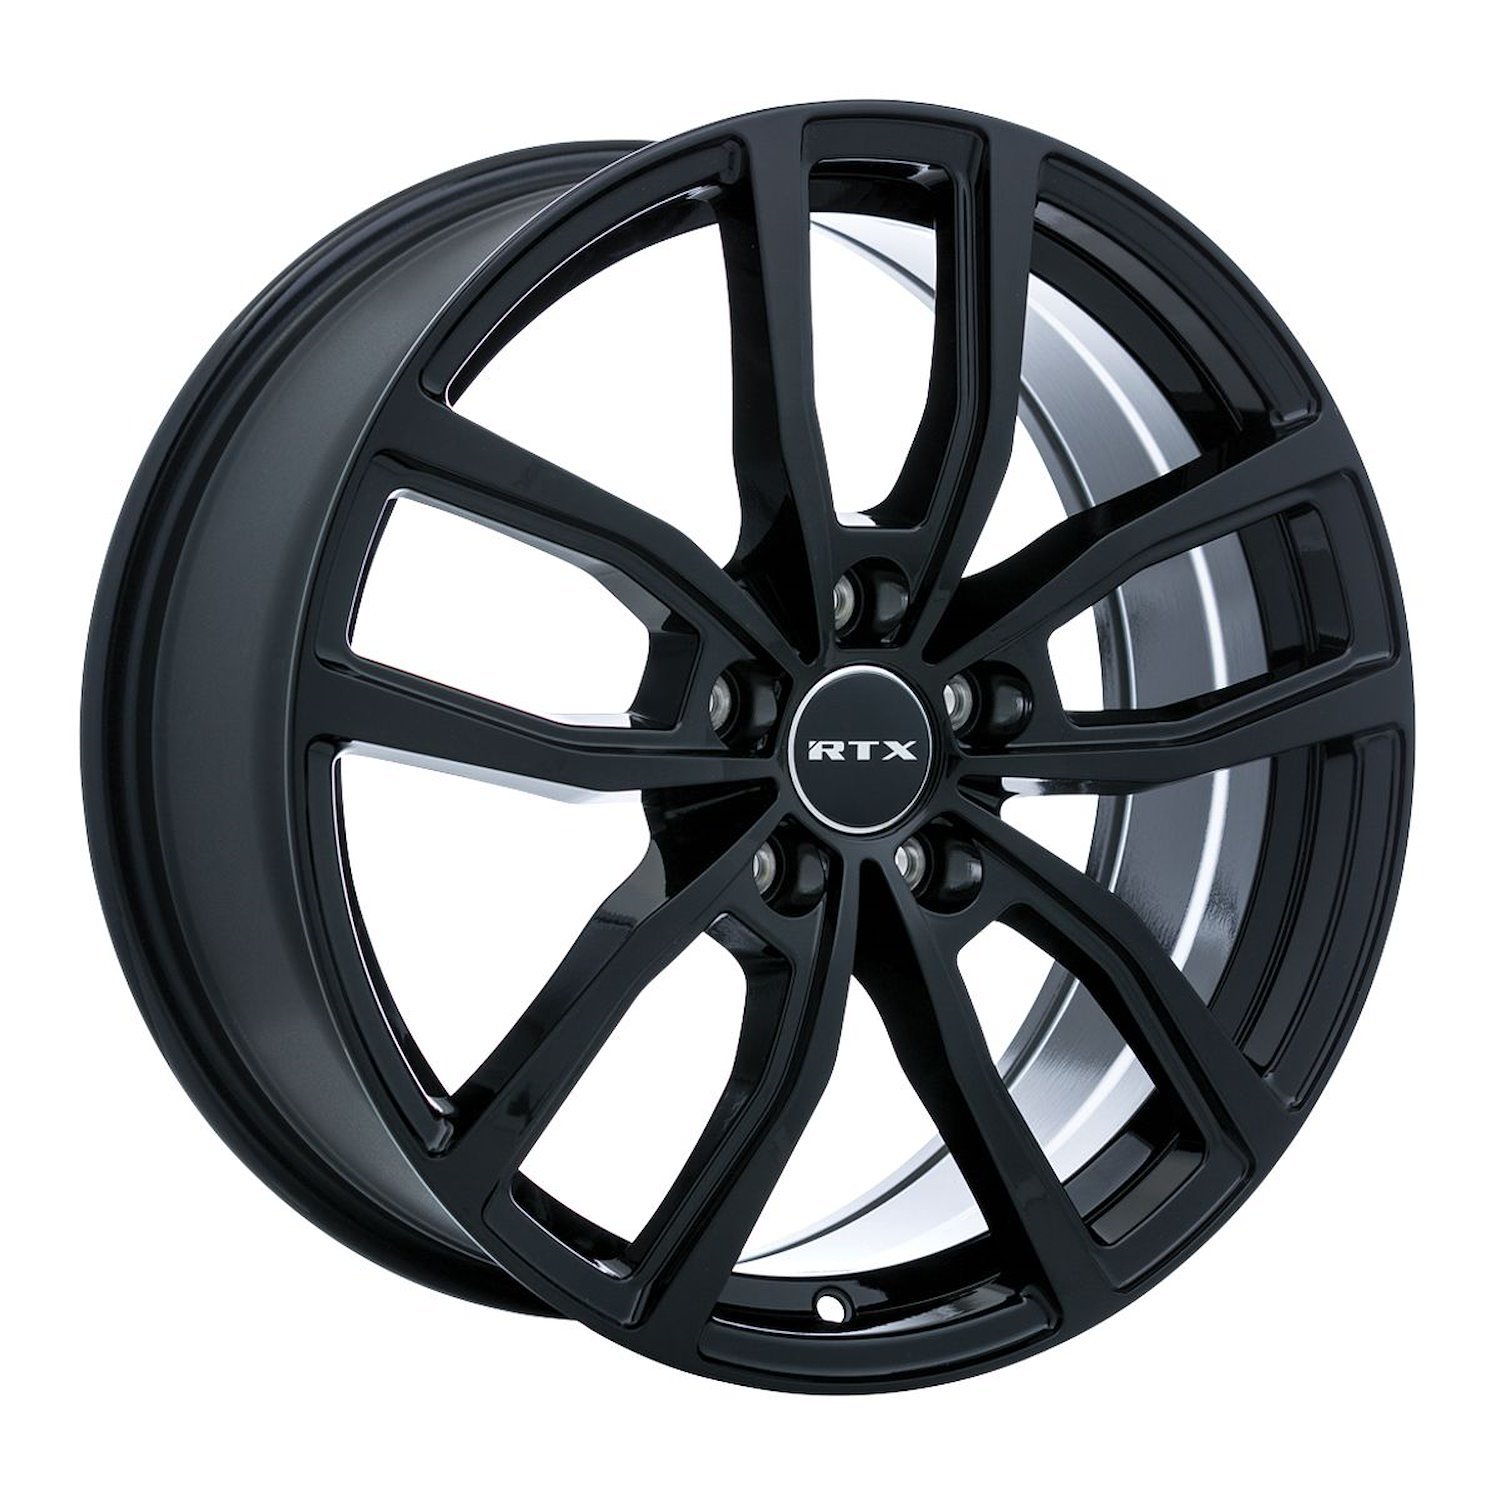 163709 RTX-Series Solstice Wheel [Size: 17" x 7"] Gloss Black Finish